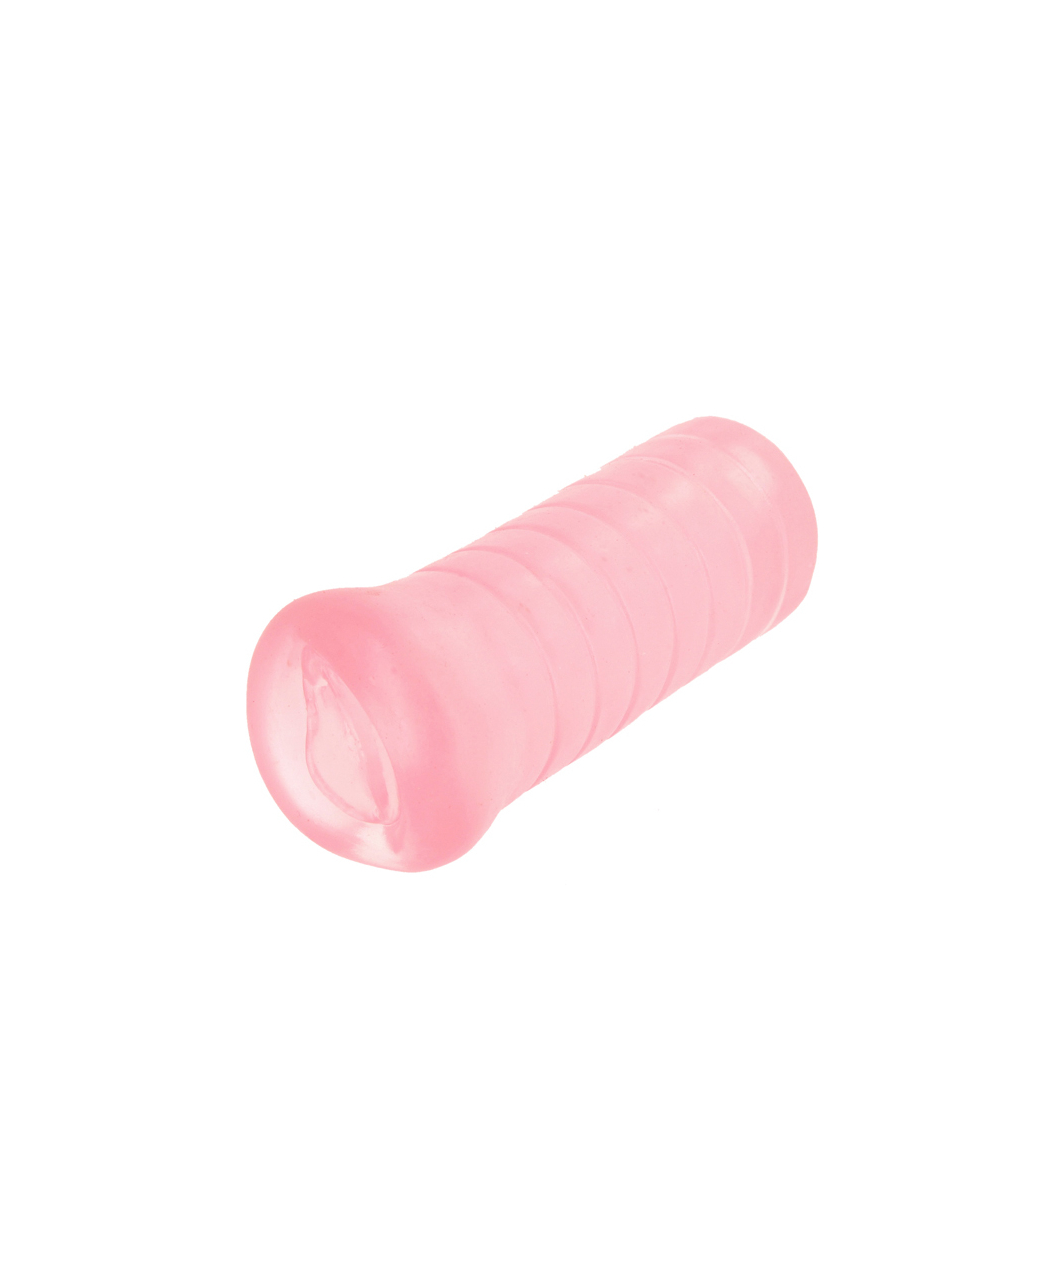 Charmly Toy Pleasure Pink